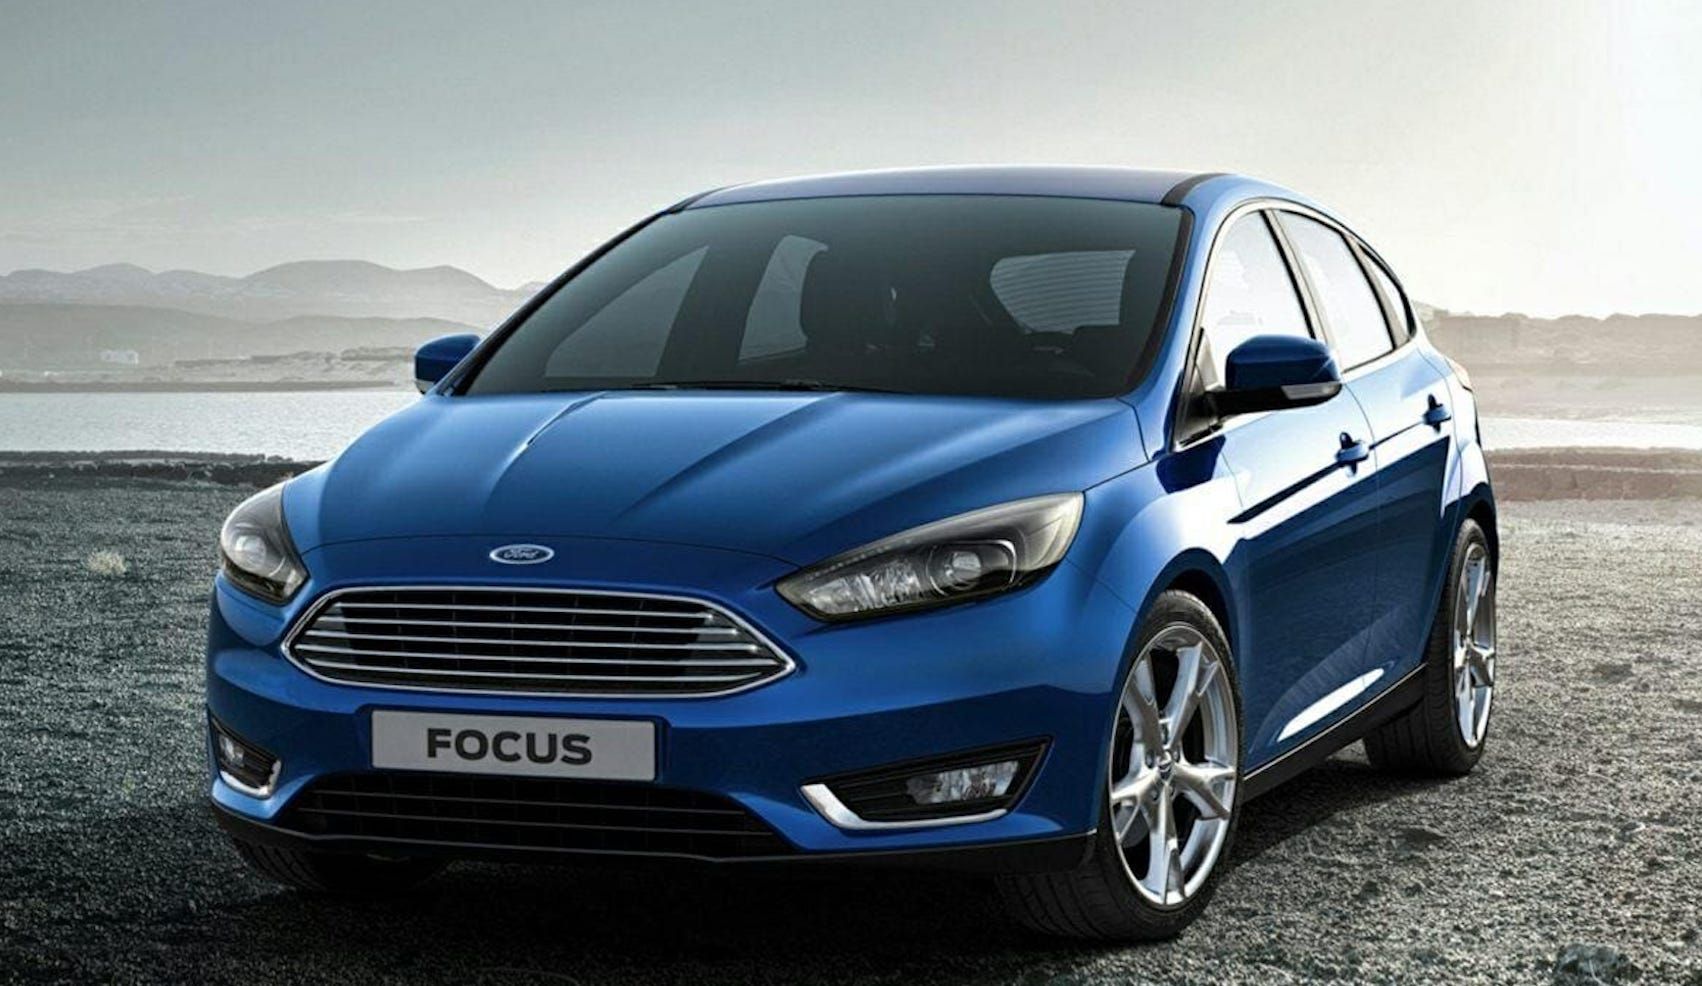 2018 Ford Focus blue exterior